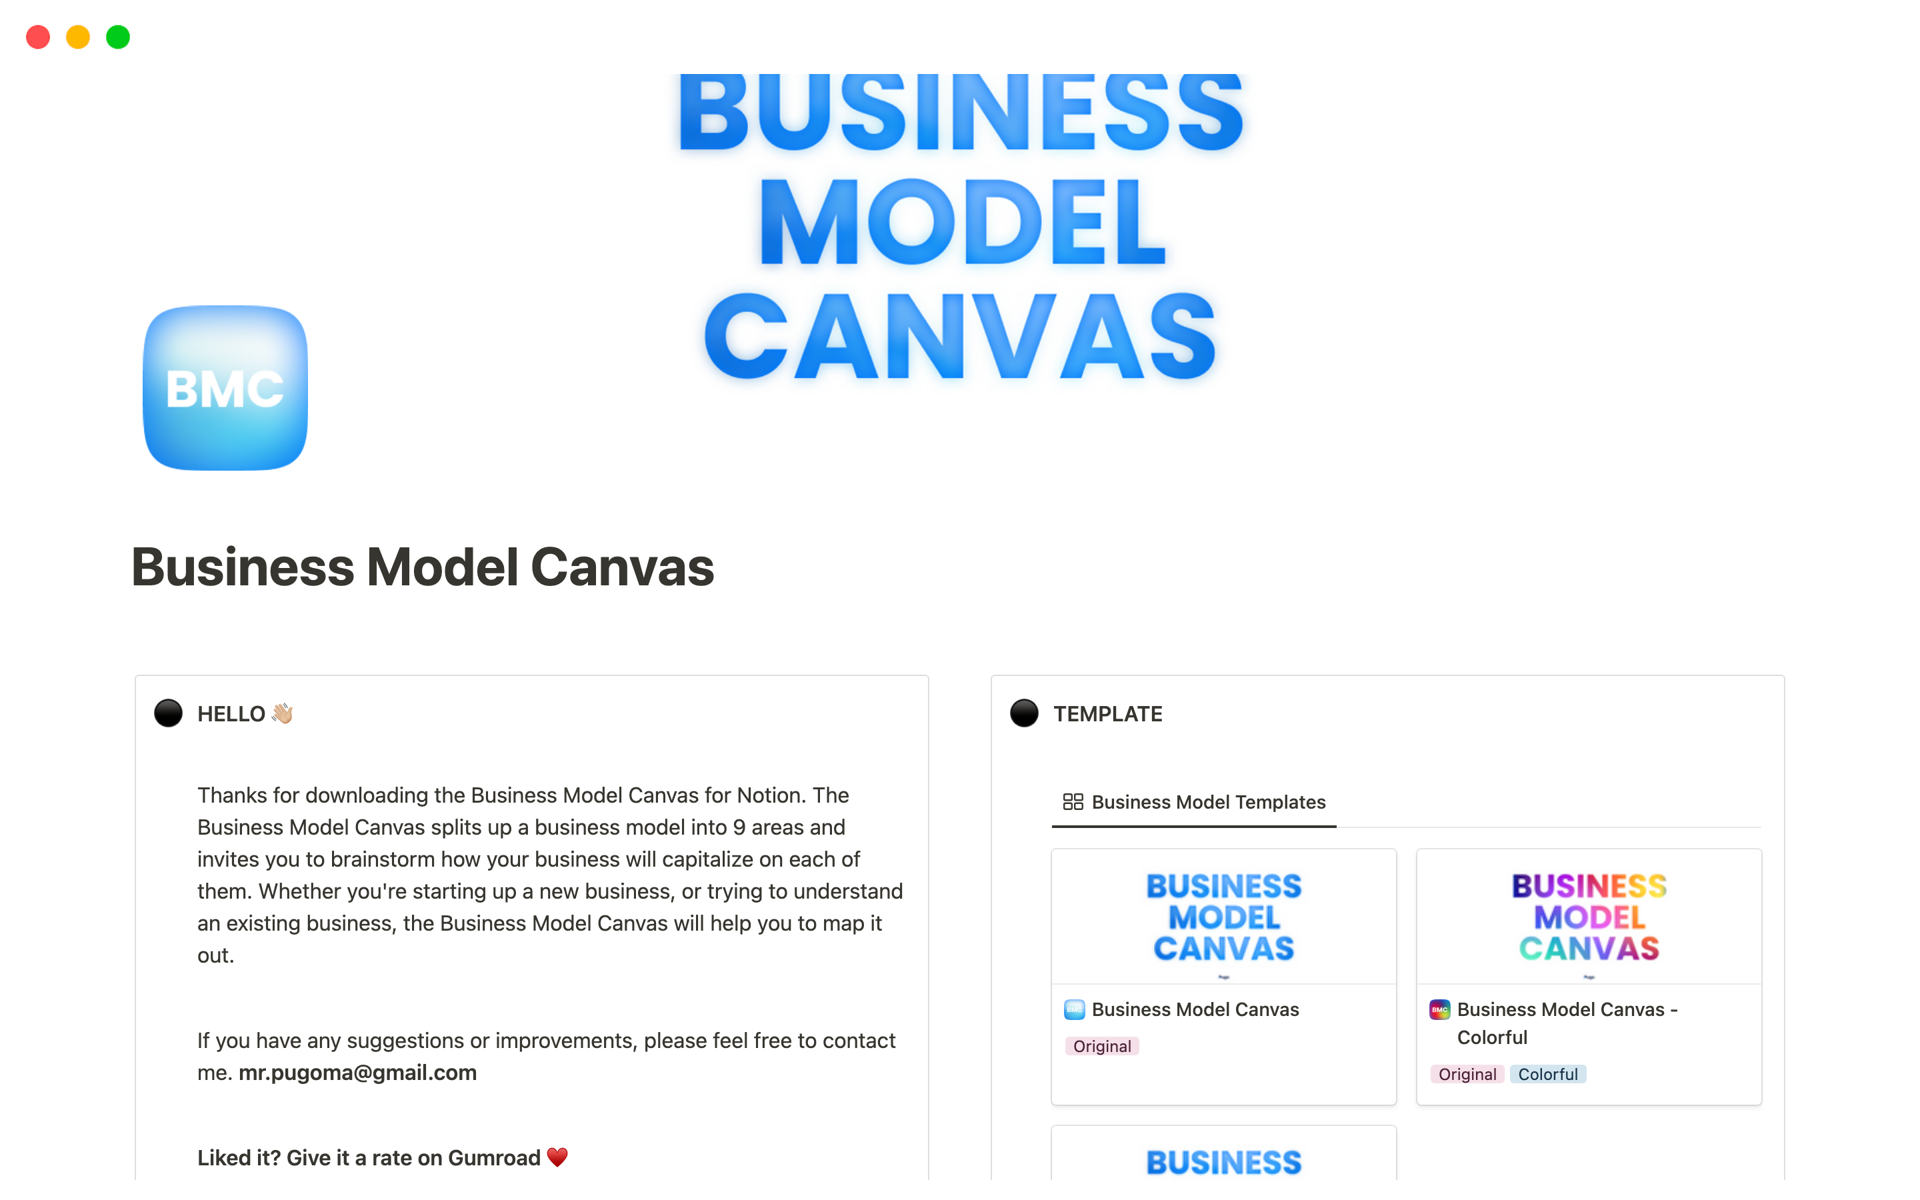 Vista previa de una plantilla para Business Model Canvas